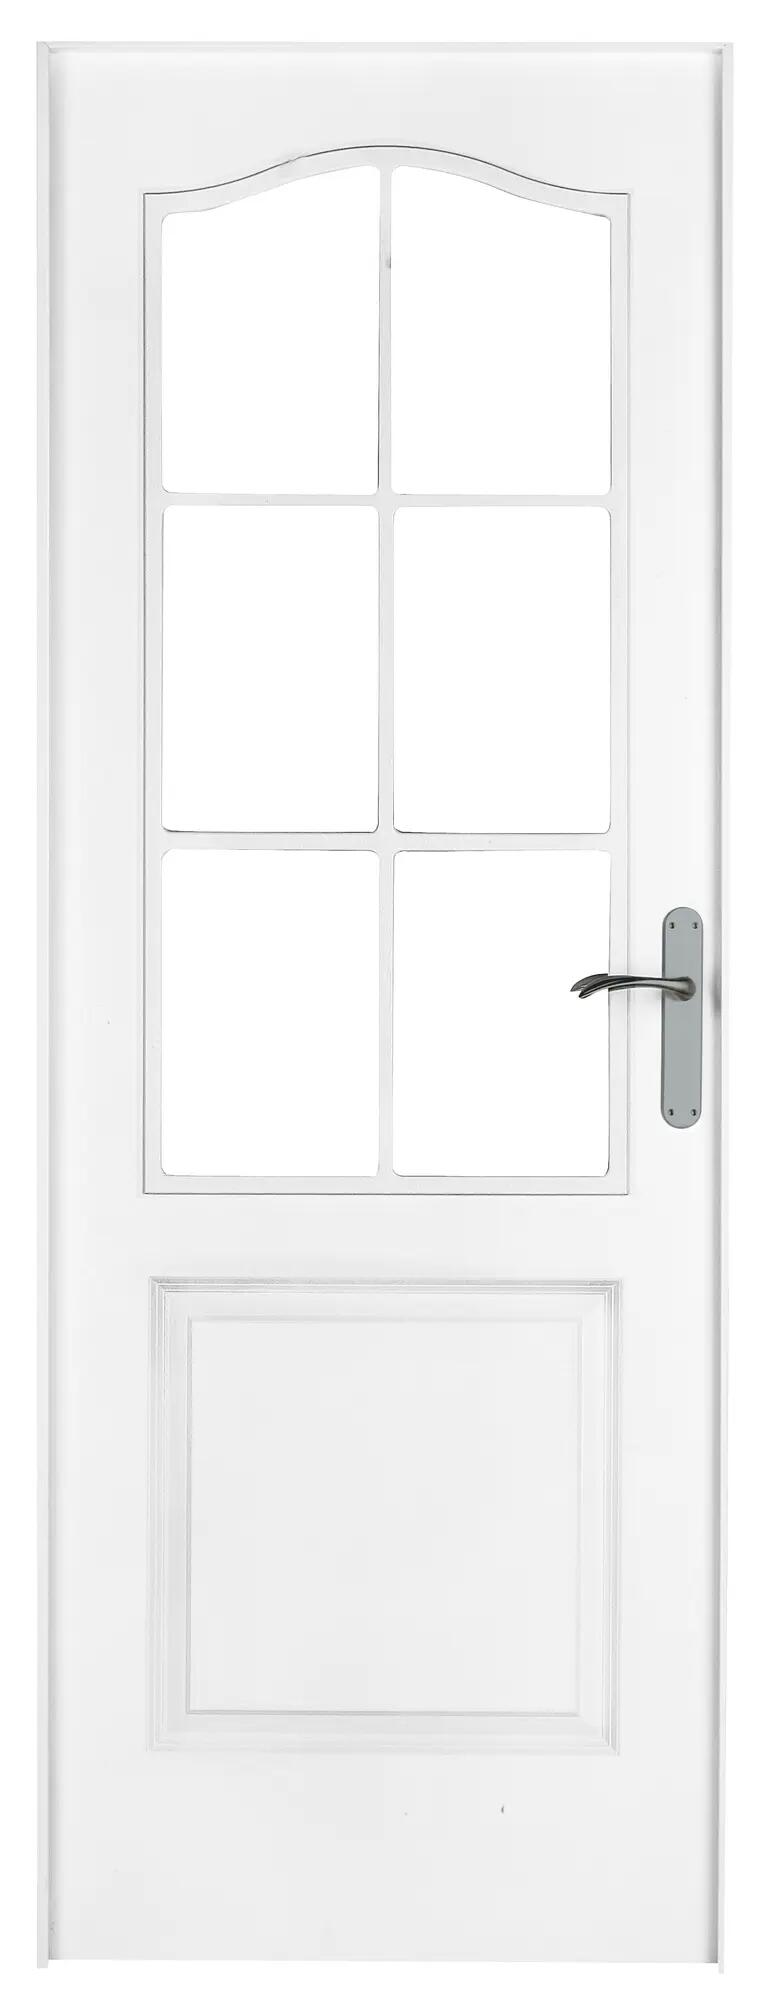 Puerta praga blanco apertura izquierda con cristal 82.5cm